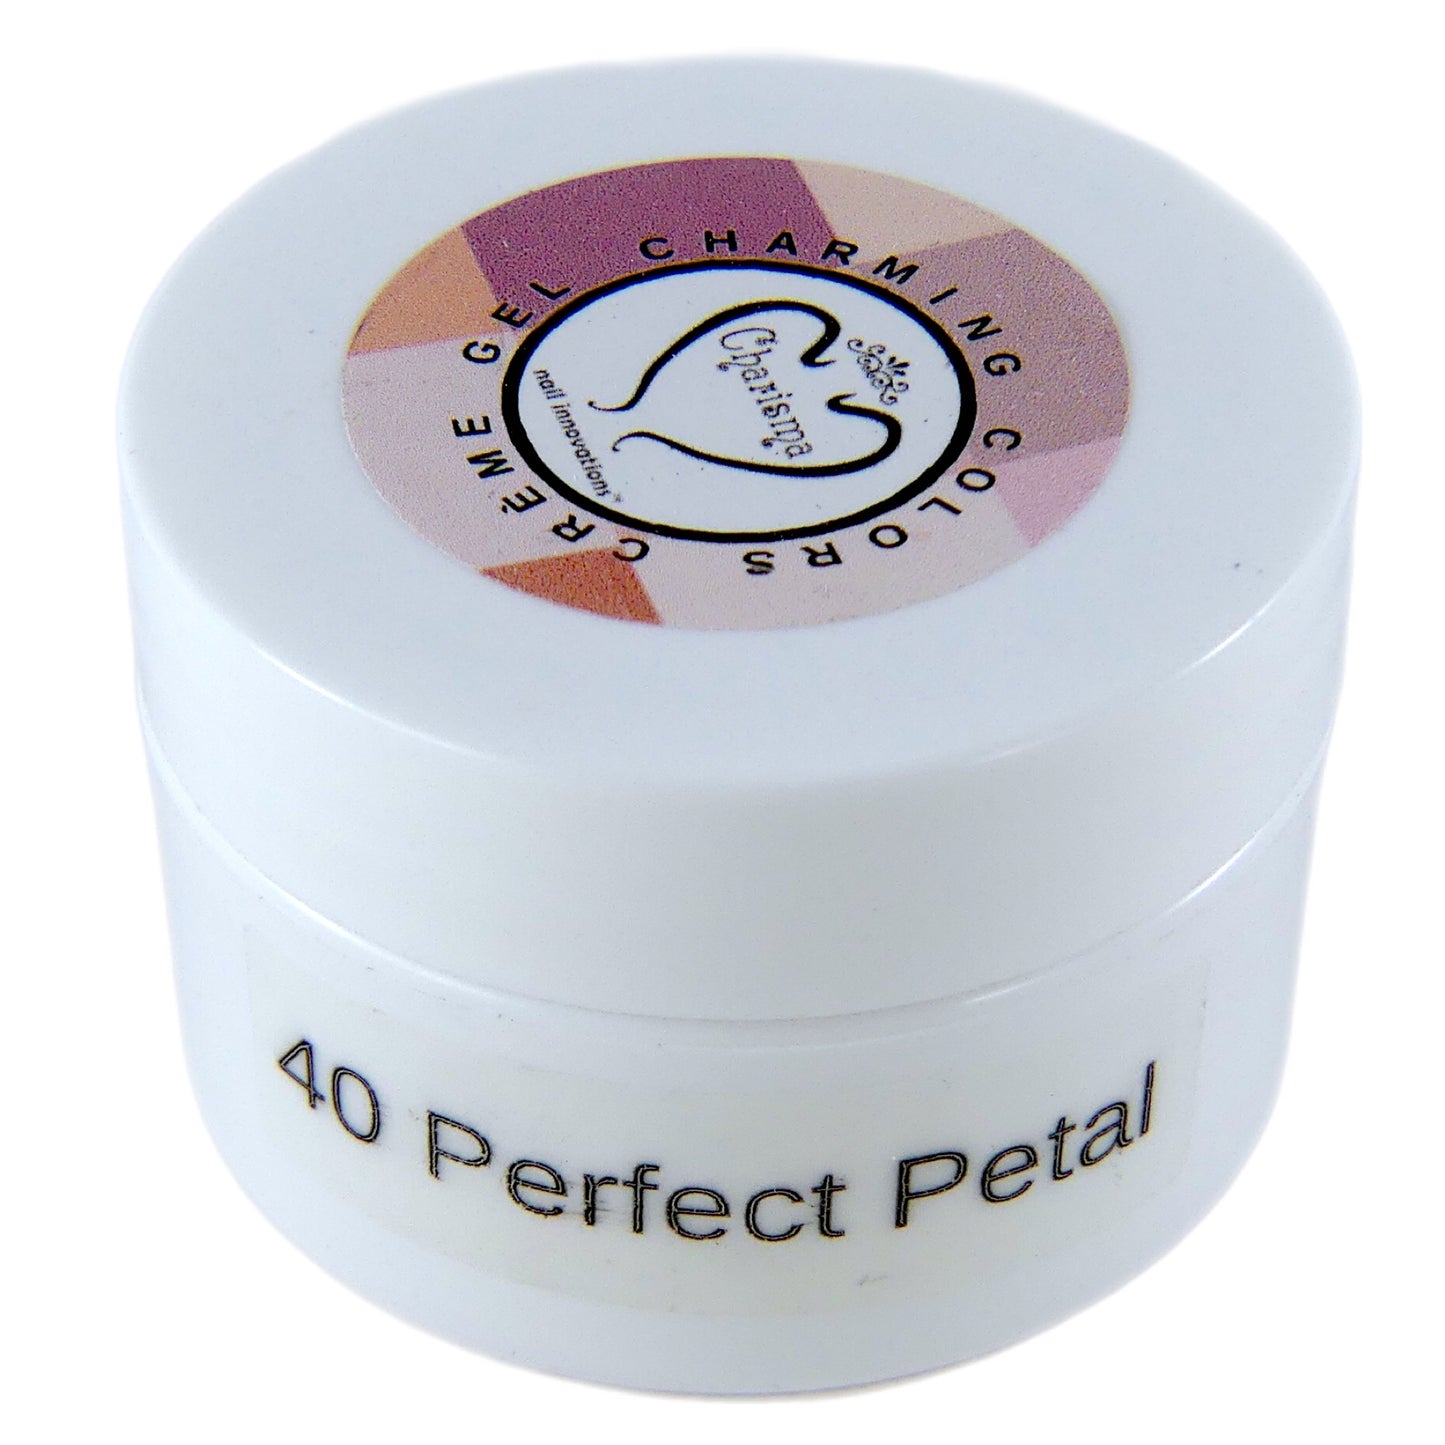 Builder Gel (Perfect Petal #40) 1/2 oz - My Little Nail Art Shop